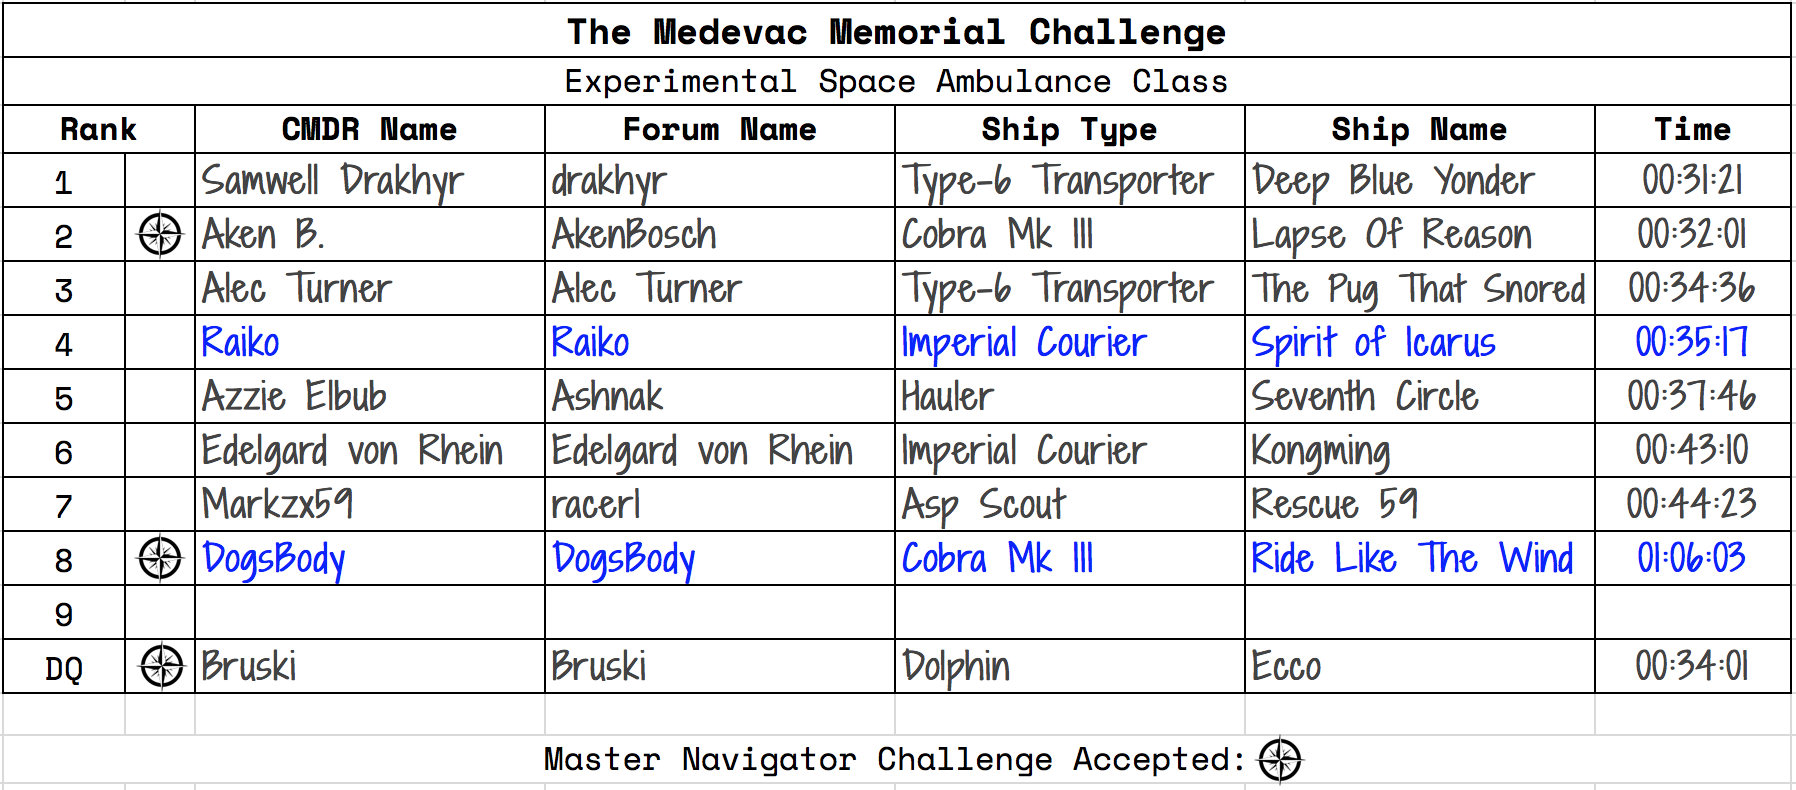 The Medevac Memorial Challenge Results: Experimental